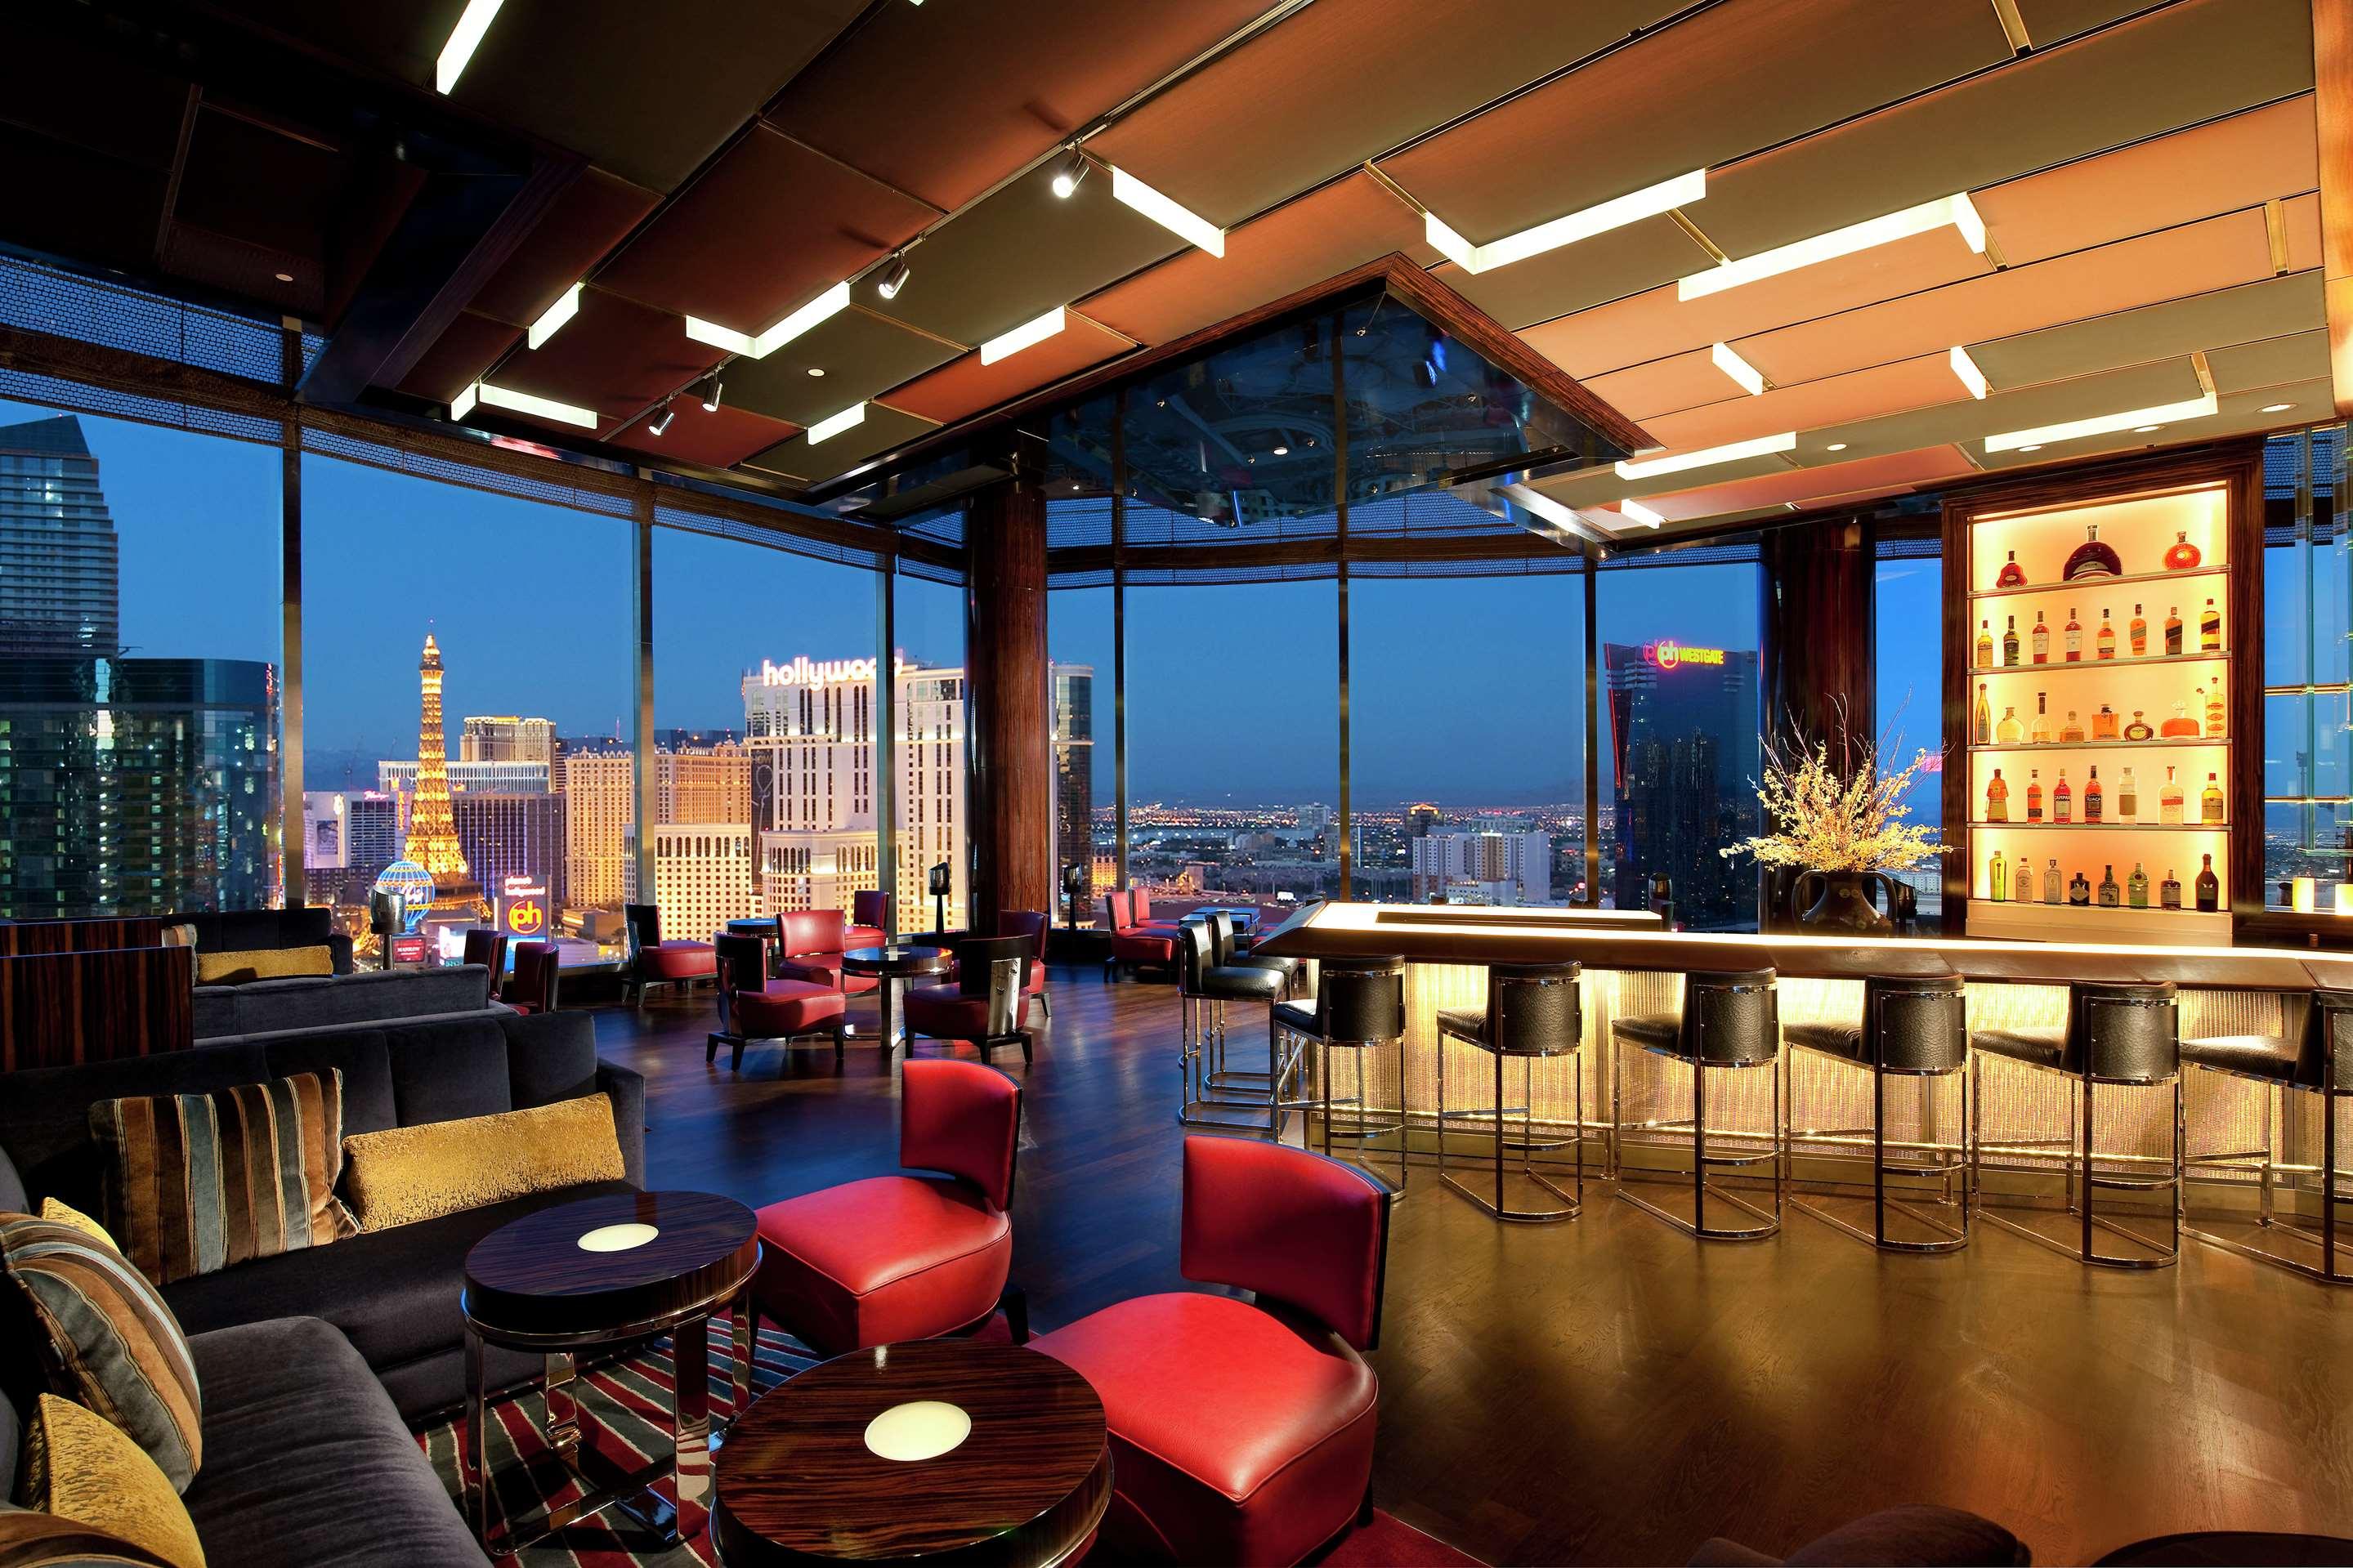 16 Best Hotels in Las Vegas. Hotels from $52/night - KAYAK